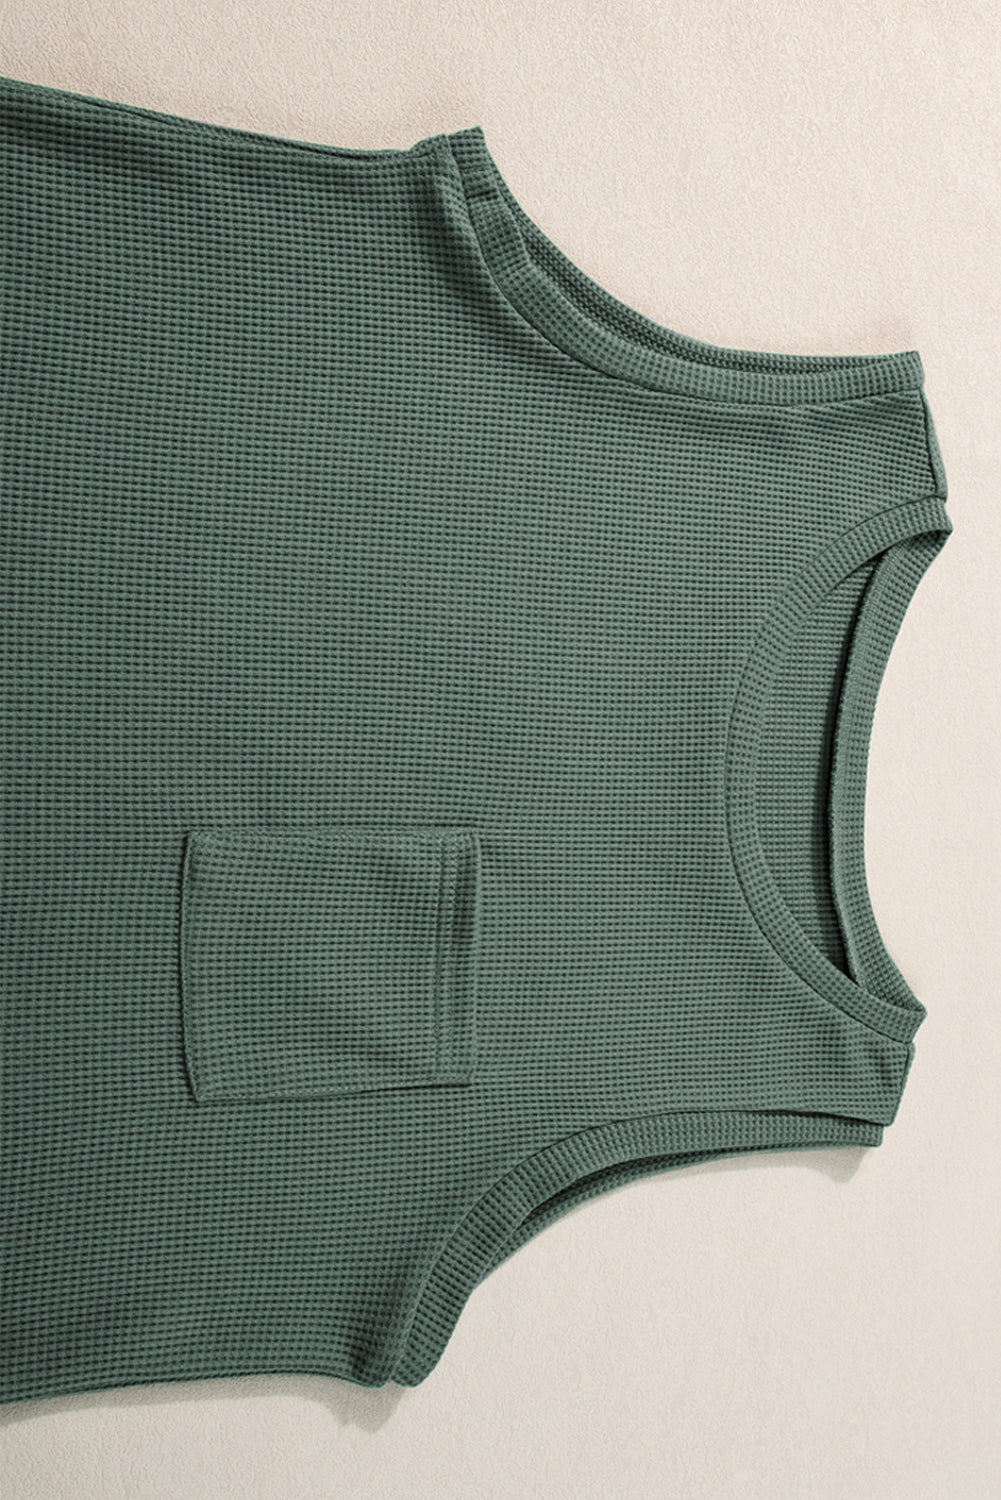 Mist Green Waffle Knit Patched Pocket Tank and Drawstring Shorts Set Short Sets JT's Designer Fashion